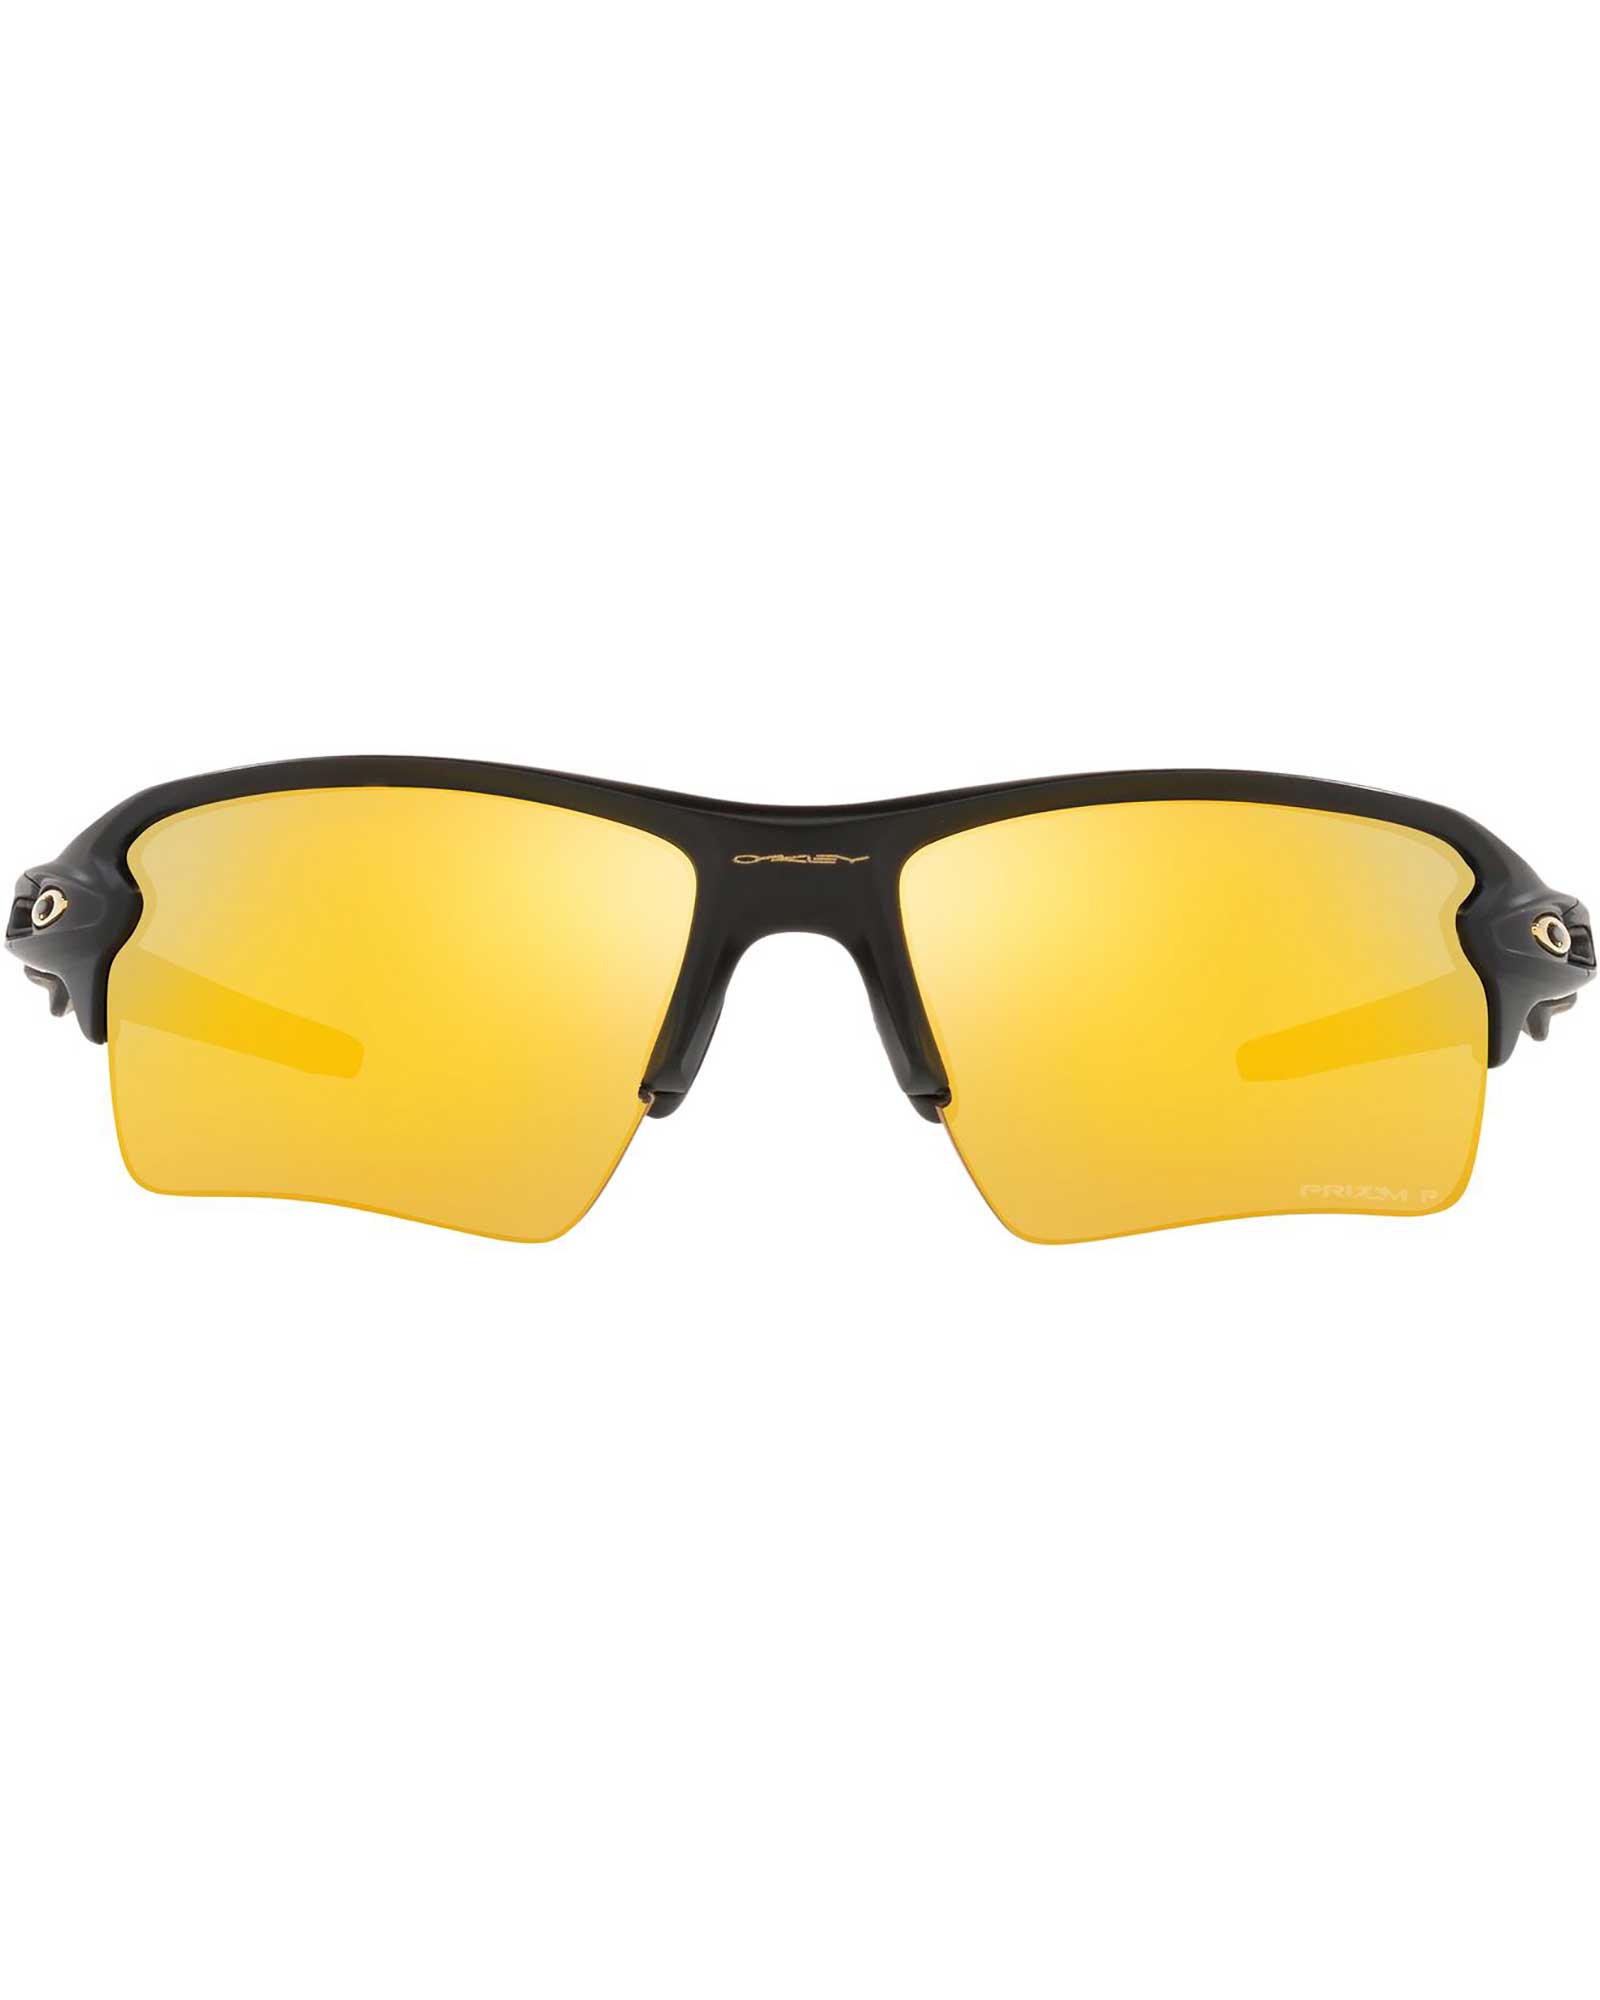 Oakley Flak 2.0 XL Matte Black / 24K Polarized Sunglasses - Matte Black